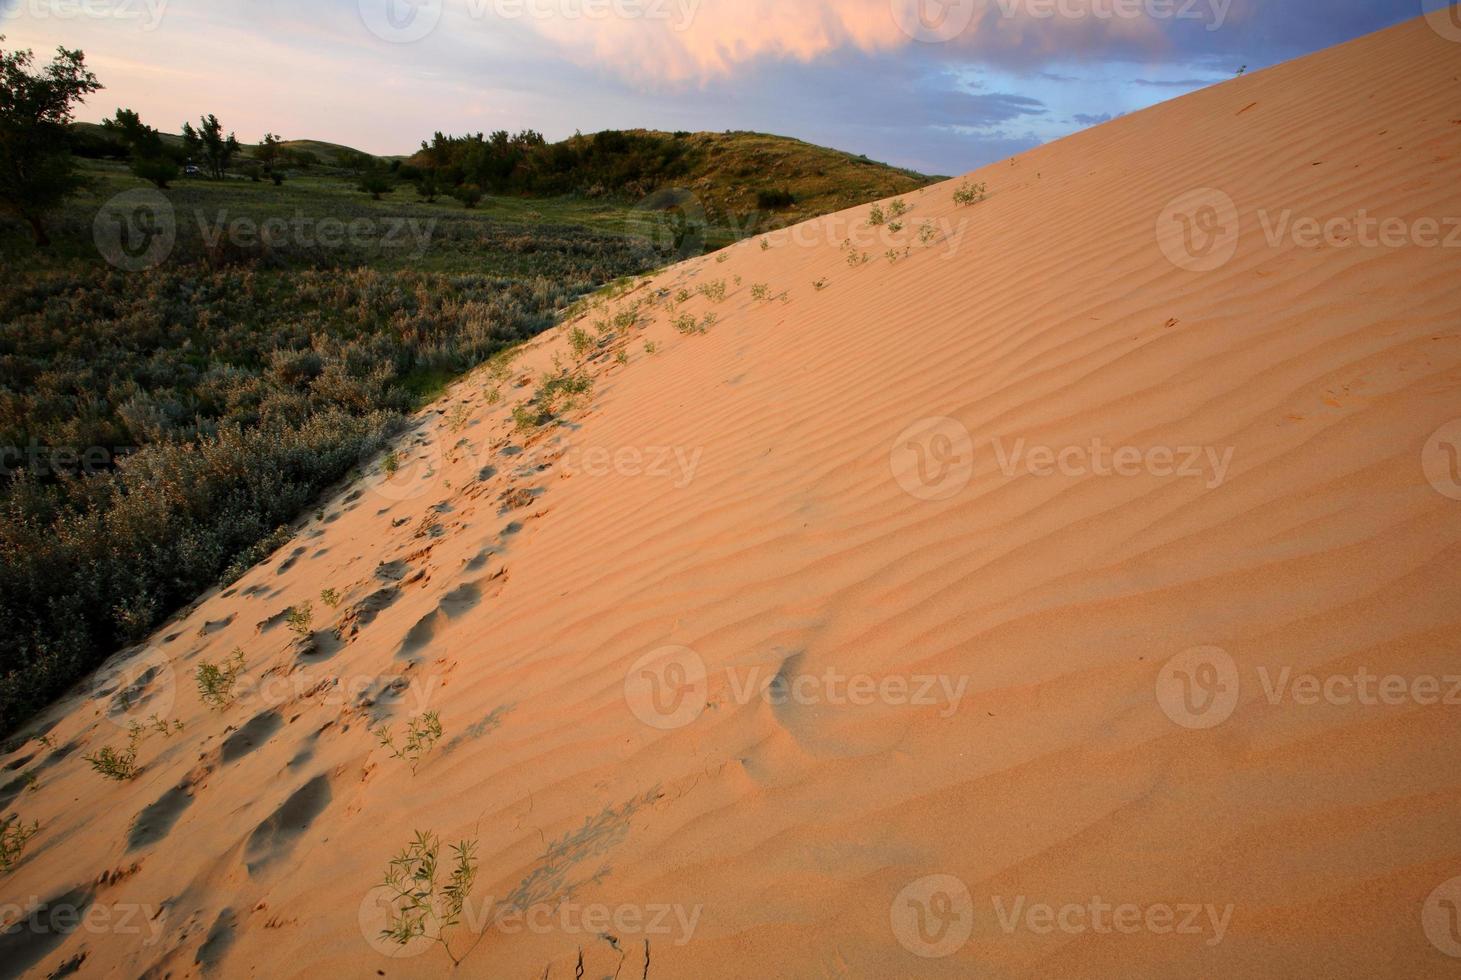 zandduin bij grote zandheuvels in het schilderachtige Saskatchewan foto